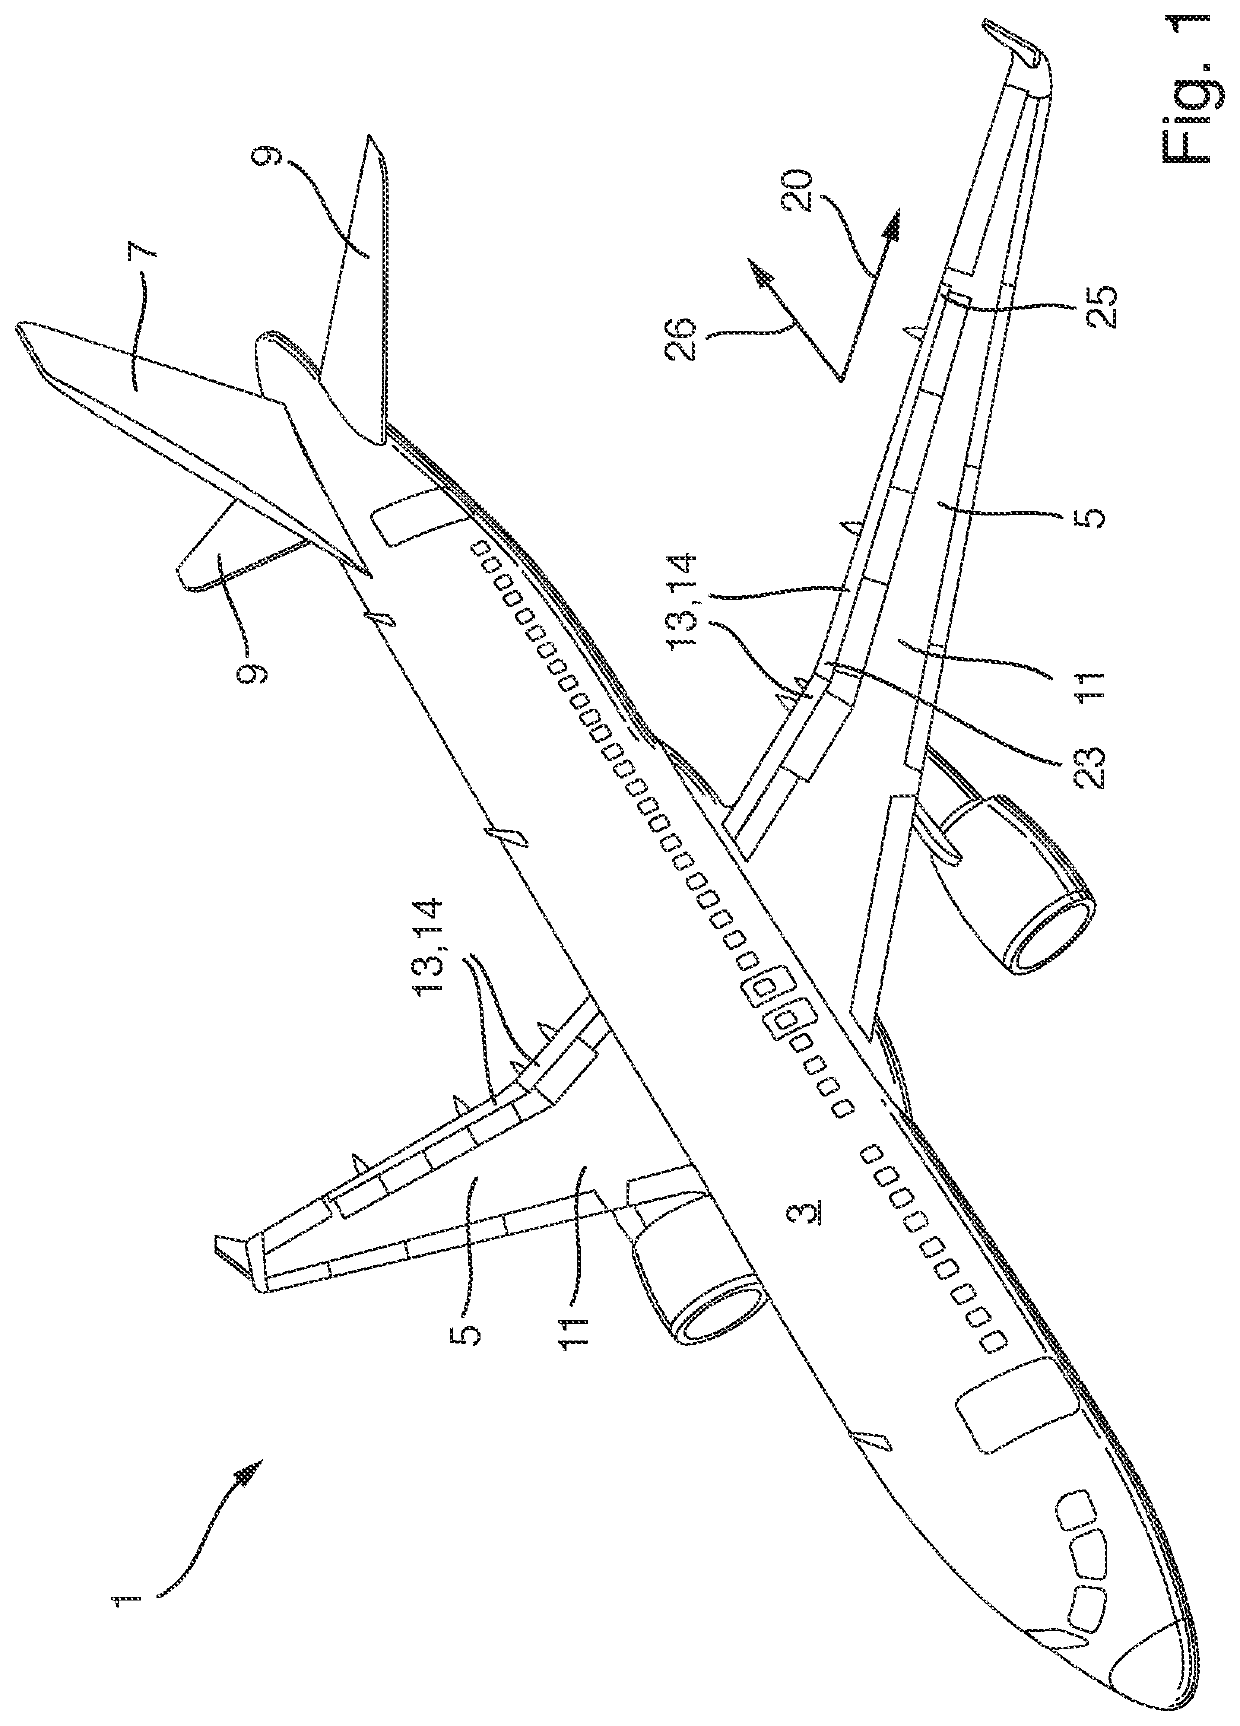 Movable aerodynamic surface for an aircraft